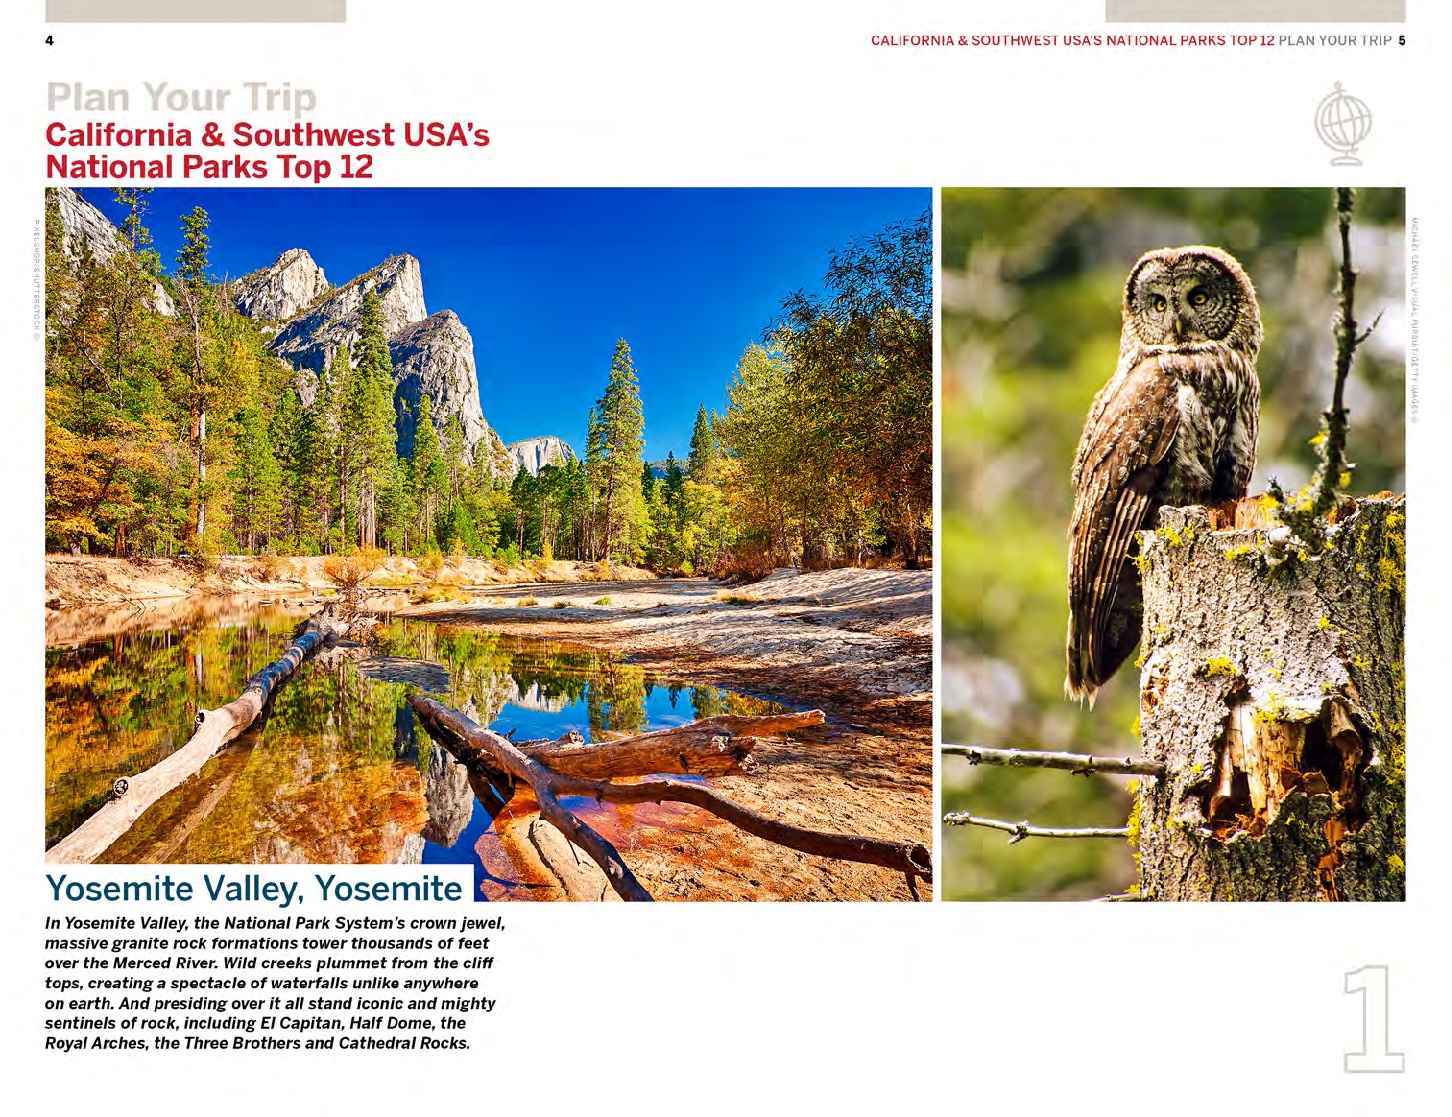 California & Southwest USA's National Parks 1